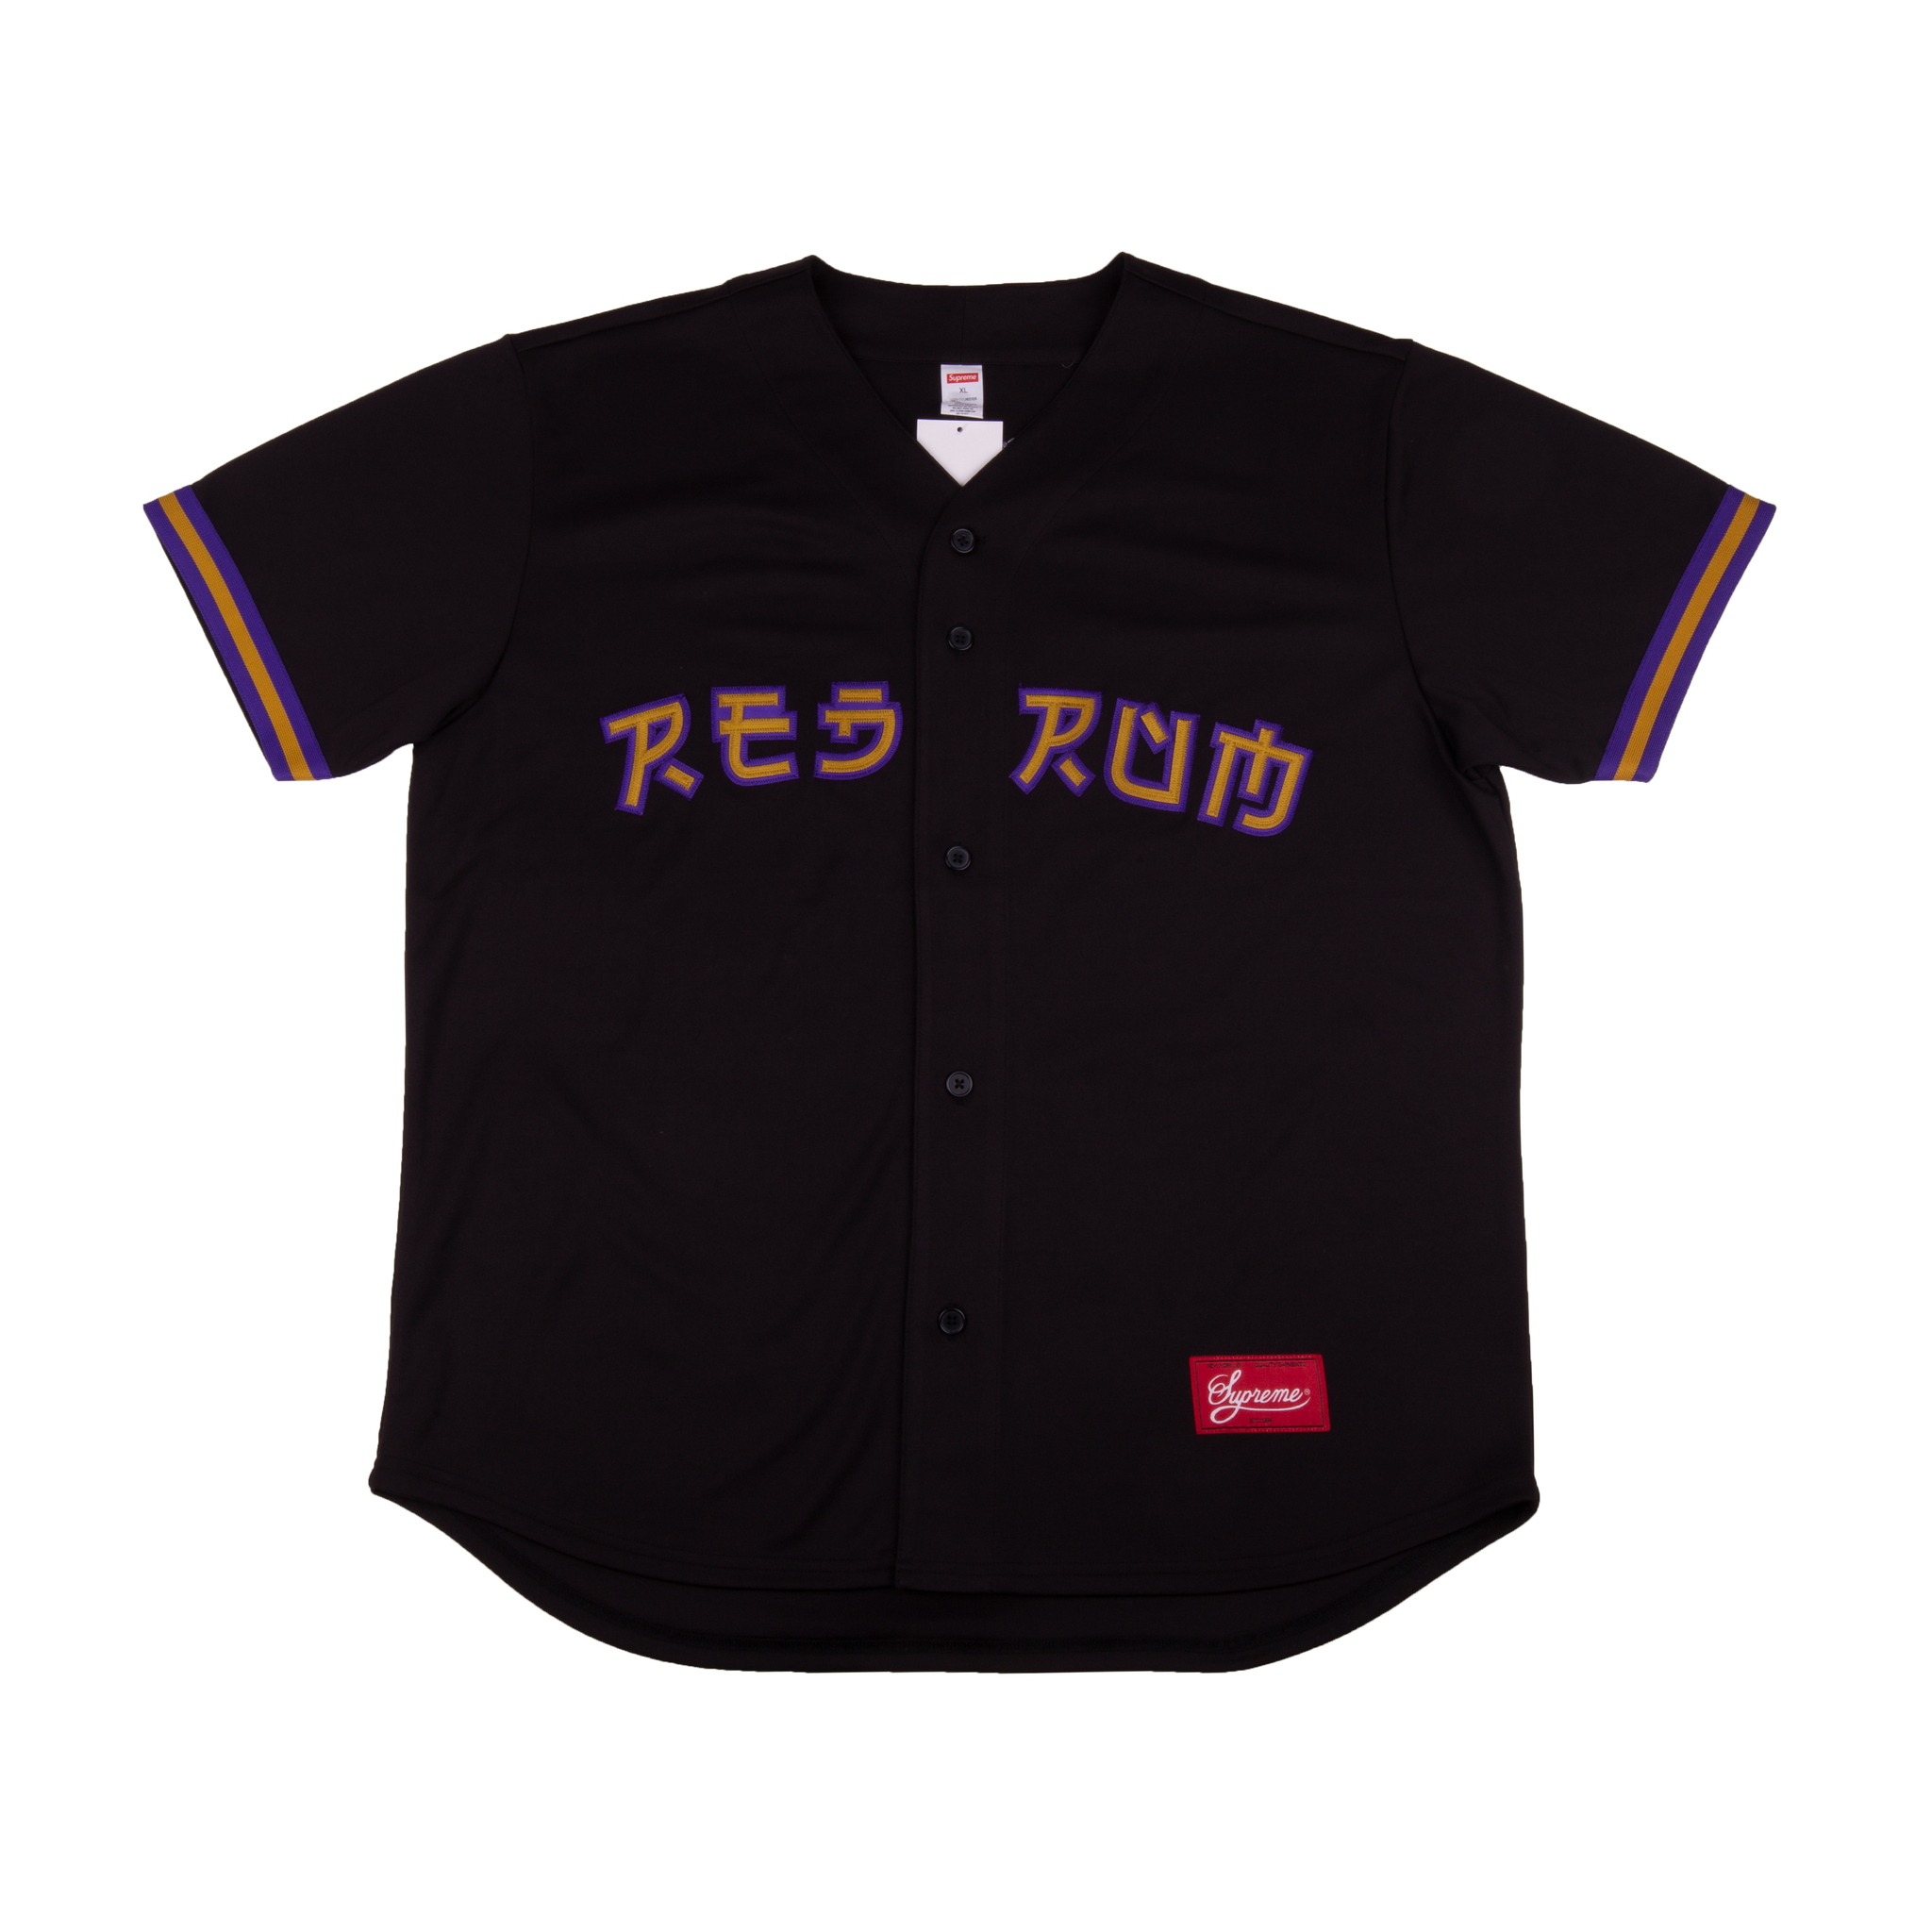 Supreme Black Red Rum Baseball Jersey